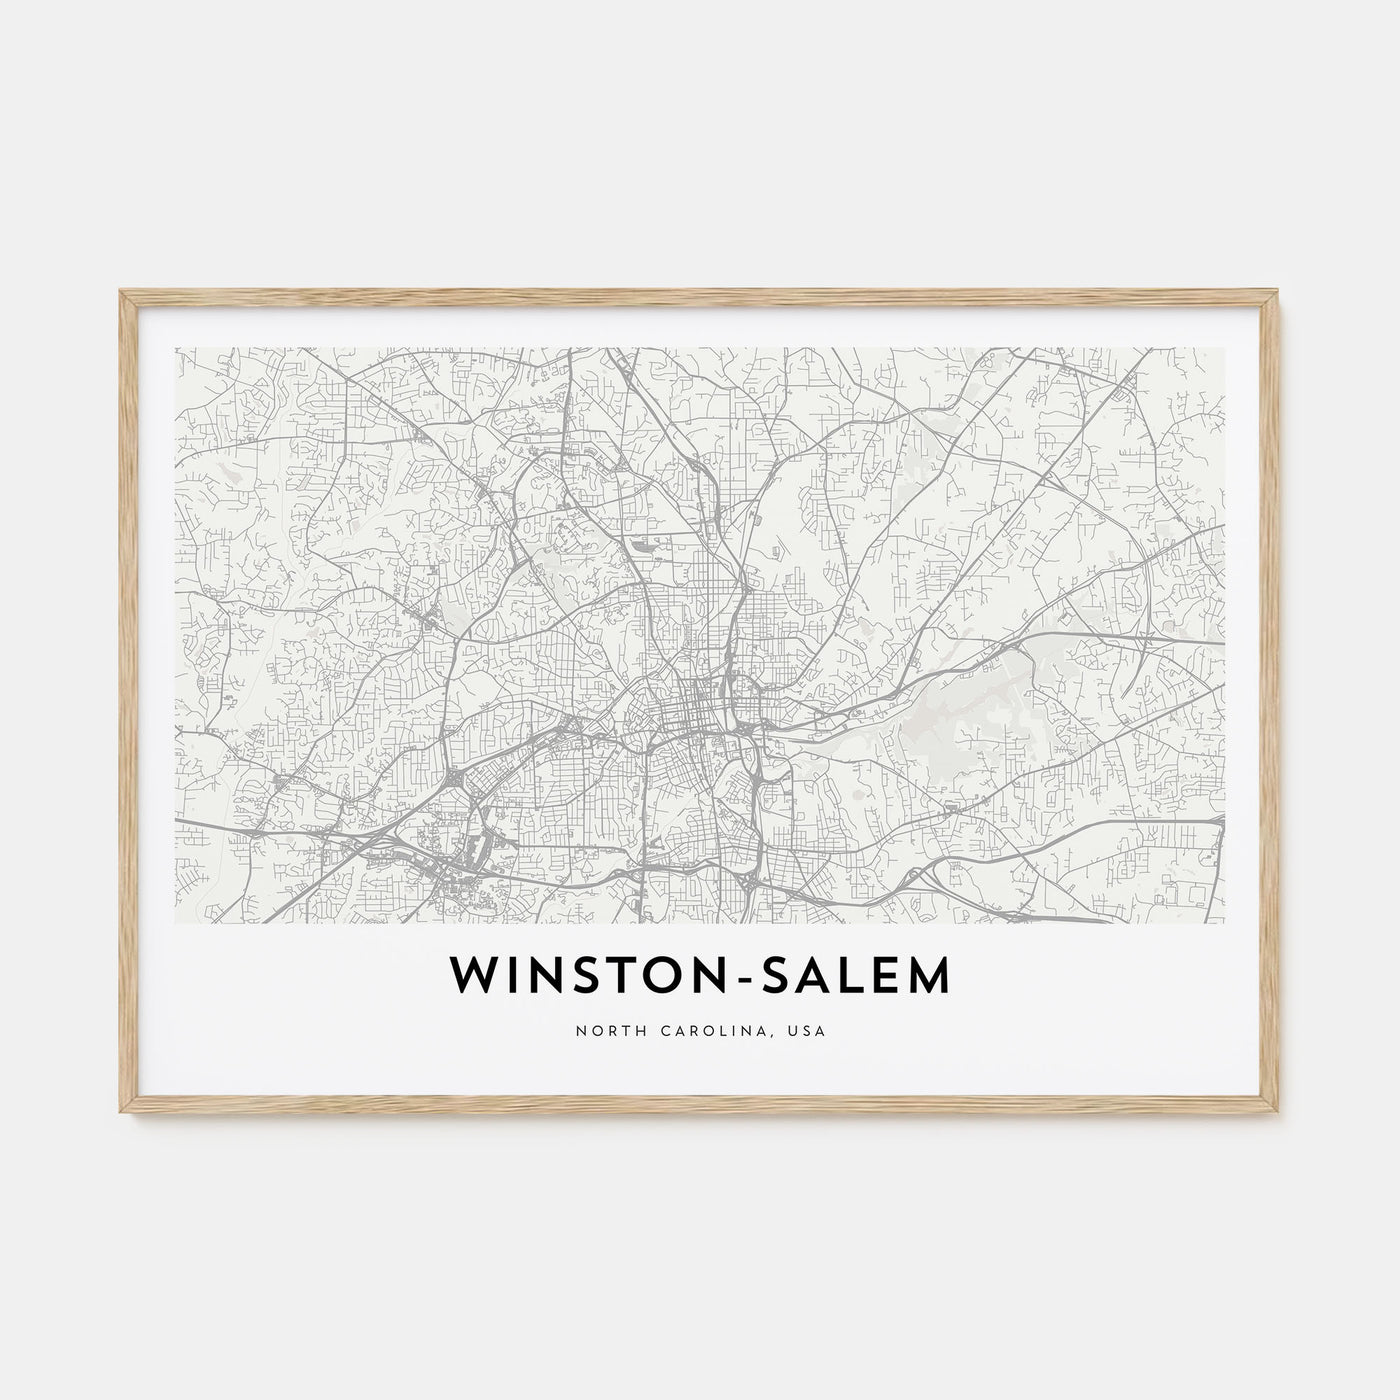 Winston-Salem Map Landscape Poster